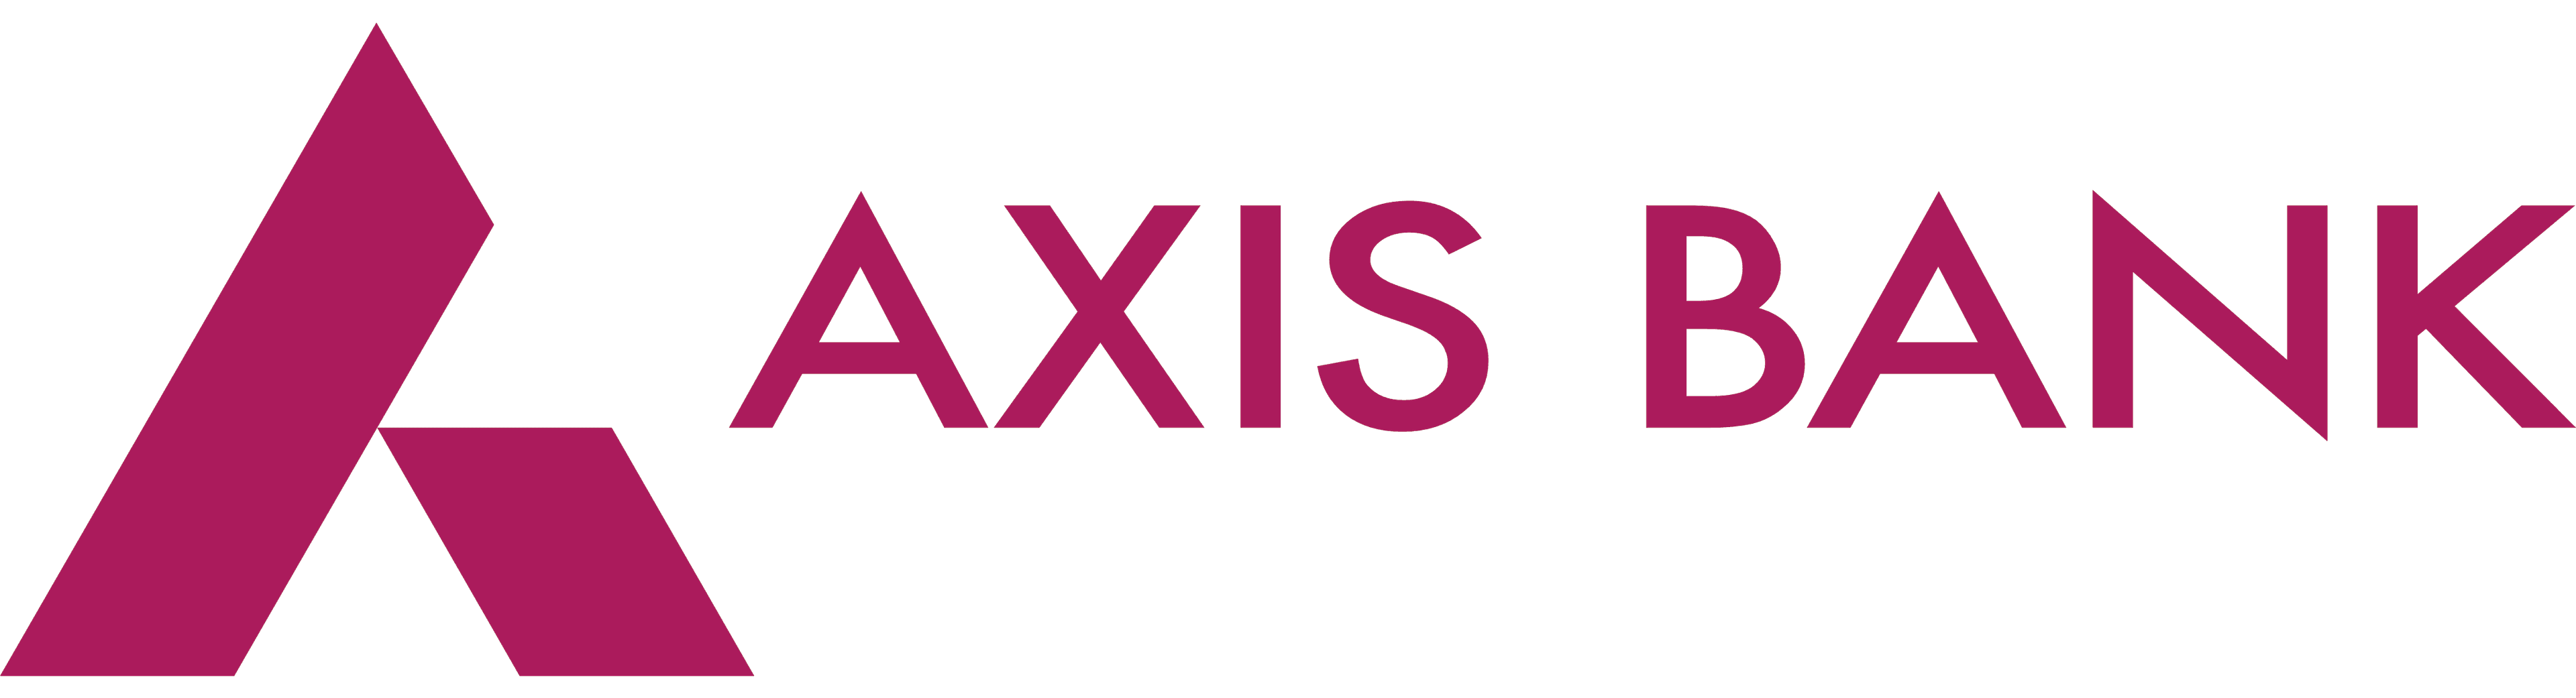 Axis banck logo